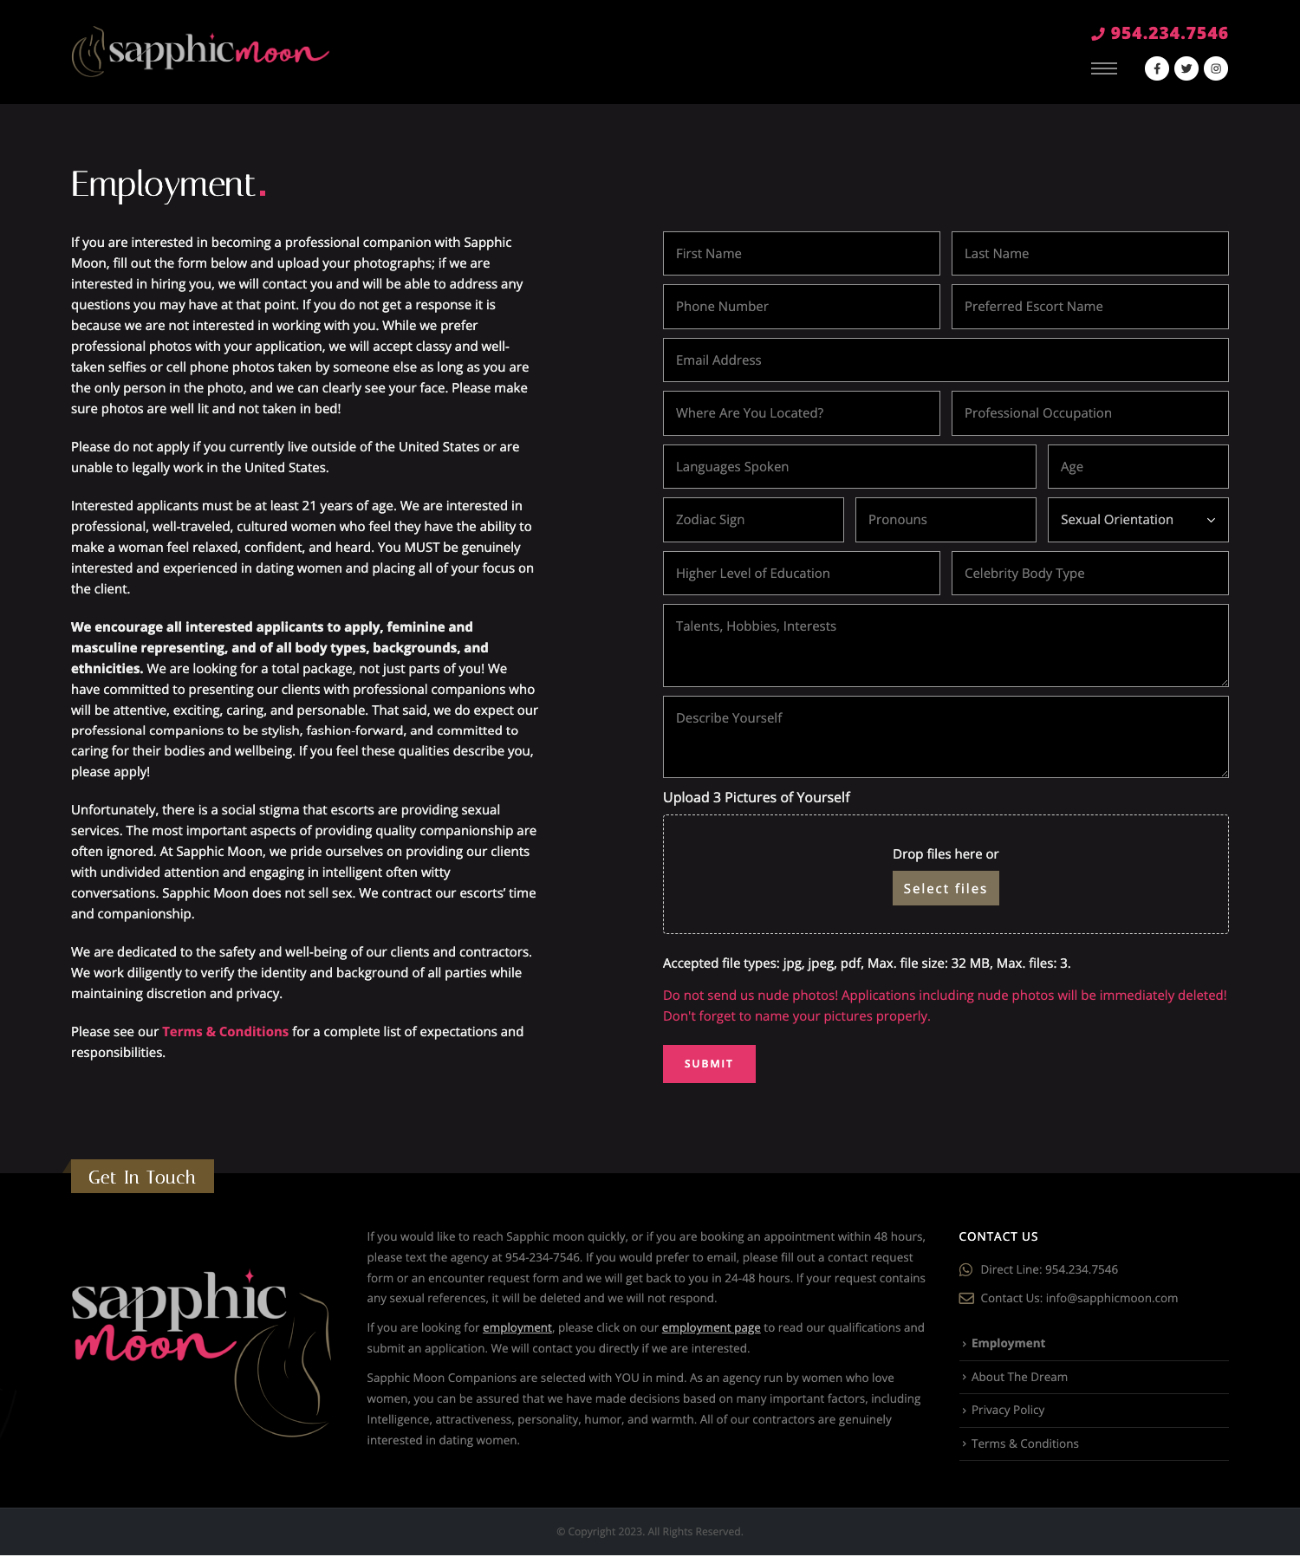 Employment-Sapphic-Moon-1300